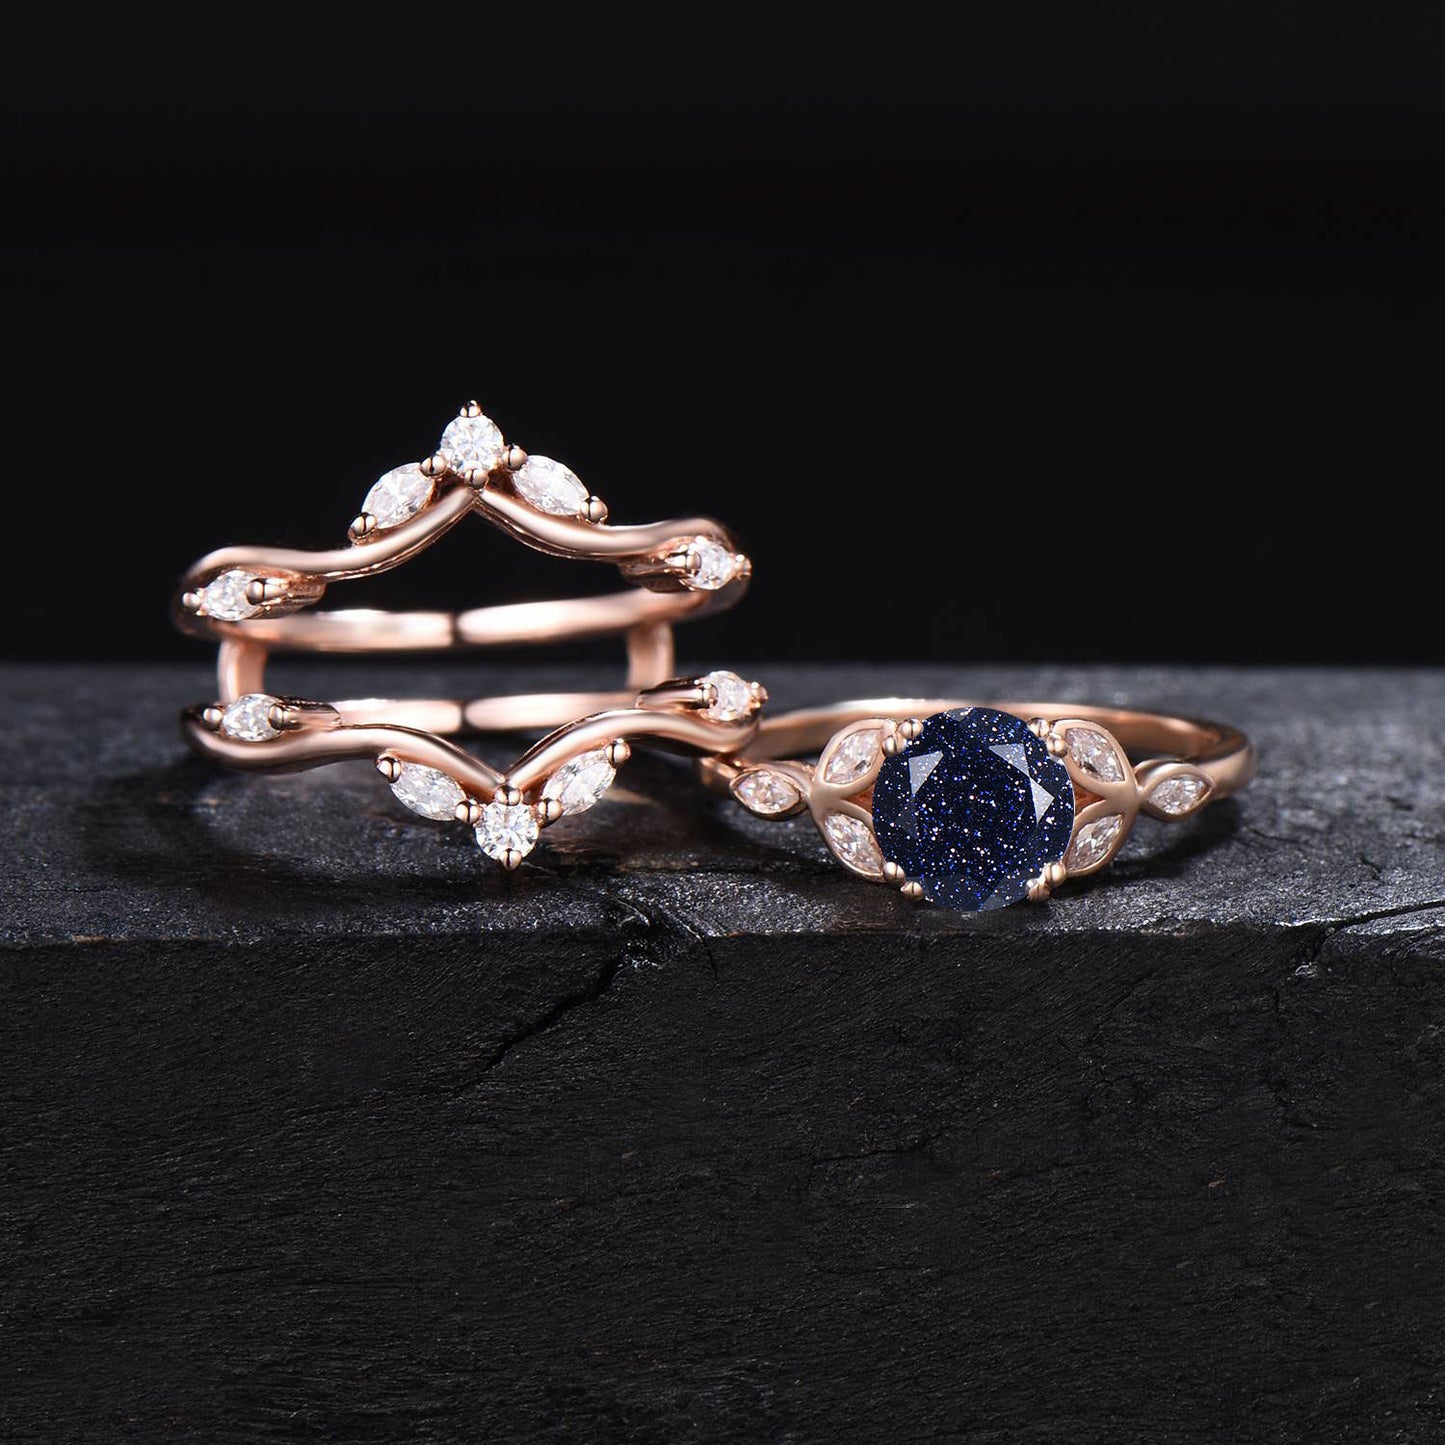 6.5mm Round Galaxy Blue Sandstone Engagement Ring Vintage Enhancer Guard Ring Set Moissanite Blue Goldstone Cluster Bridal Set Promise Gift